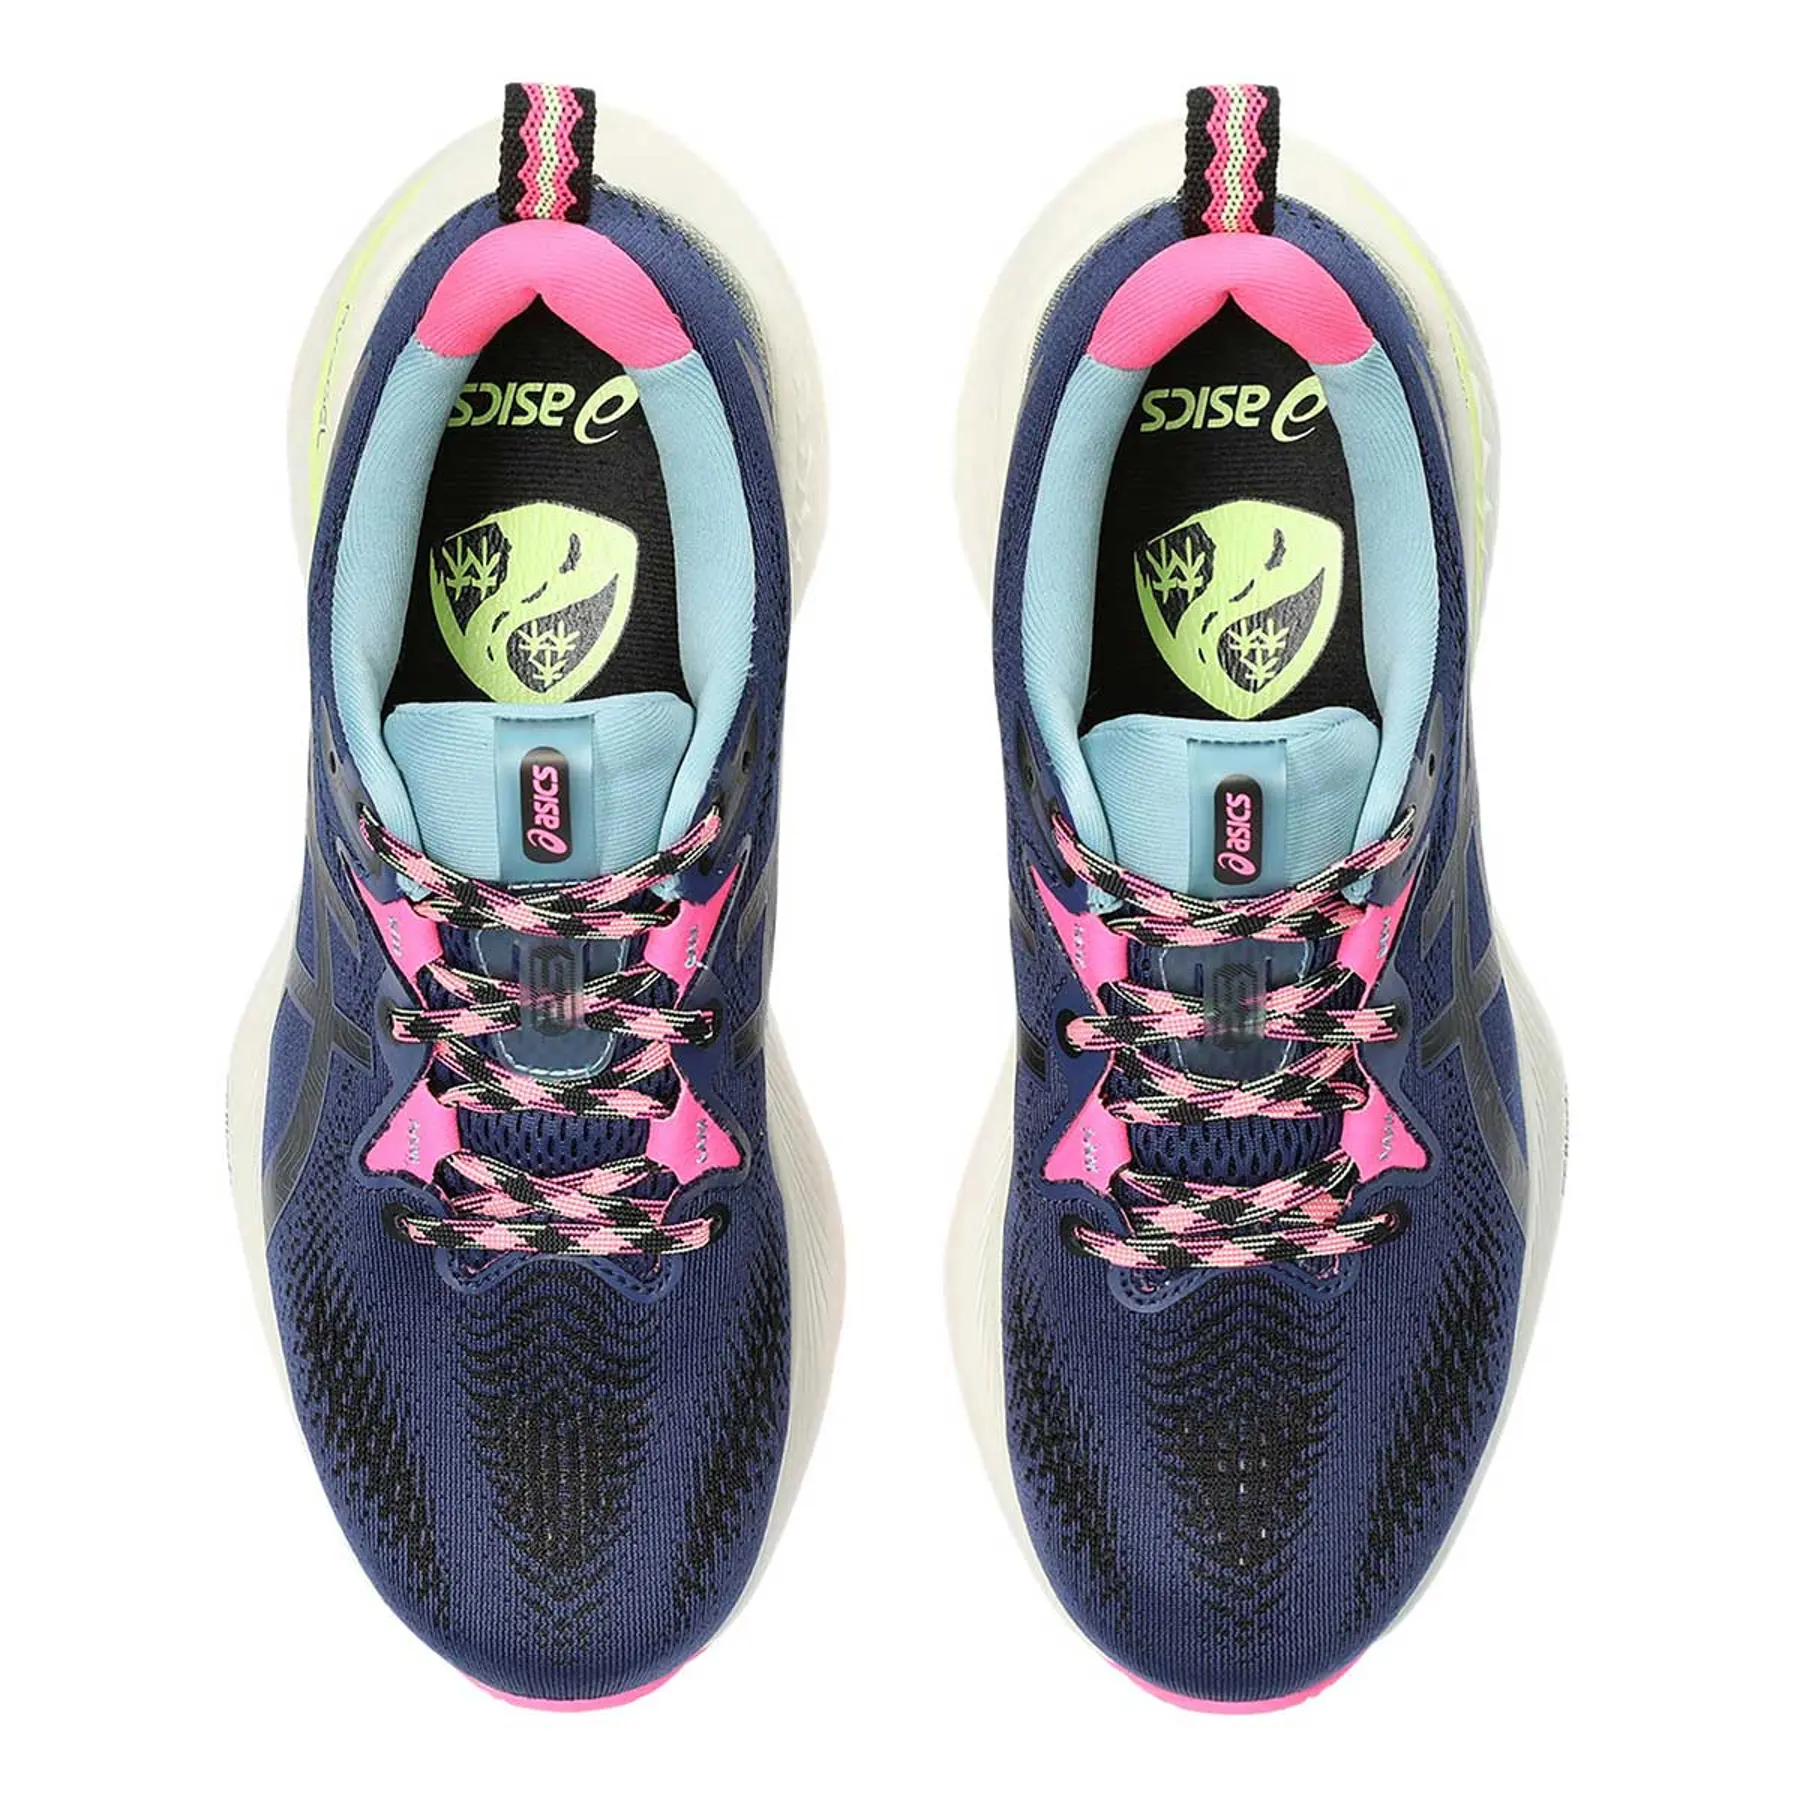 Nimbus 24 Women's Running Shoes Black 1012B201 - 001W - Asics Gel - asics  metaracer tokyo the cut